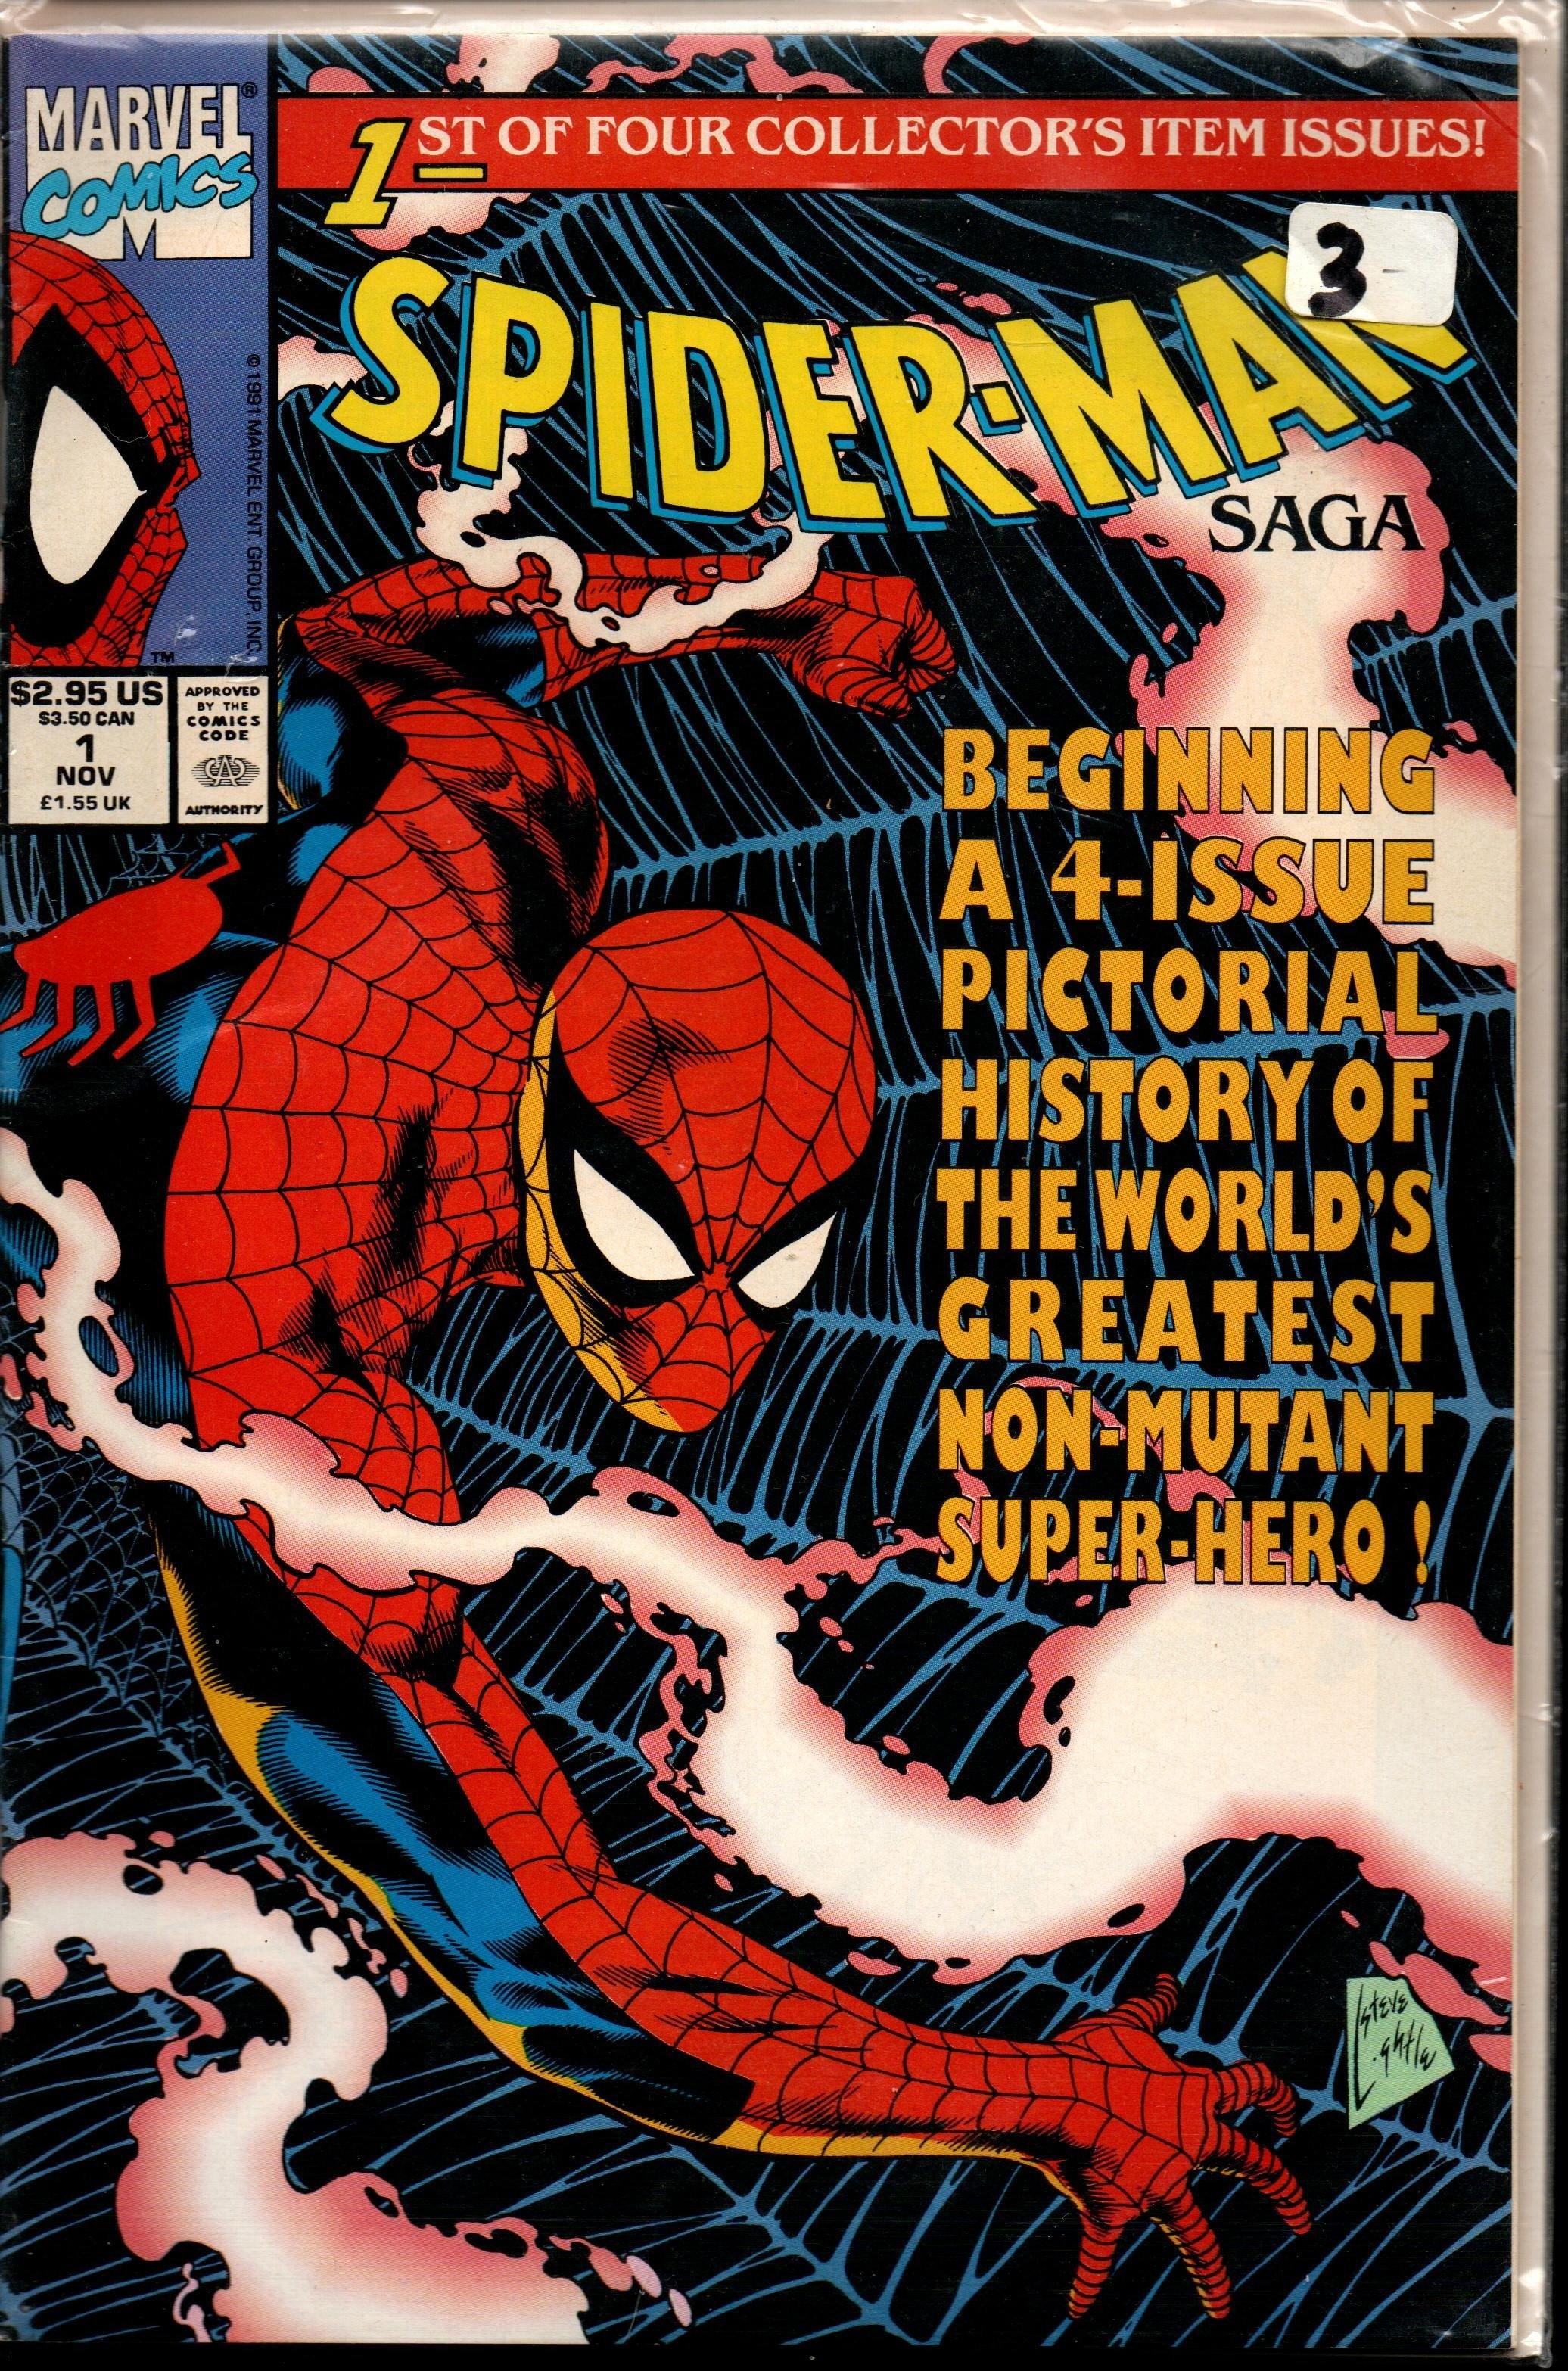 SPIDER-MAN SAGA #1 NOV 1991